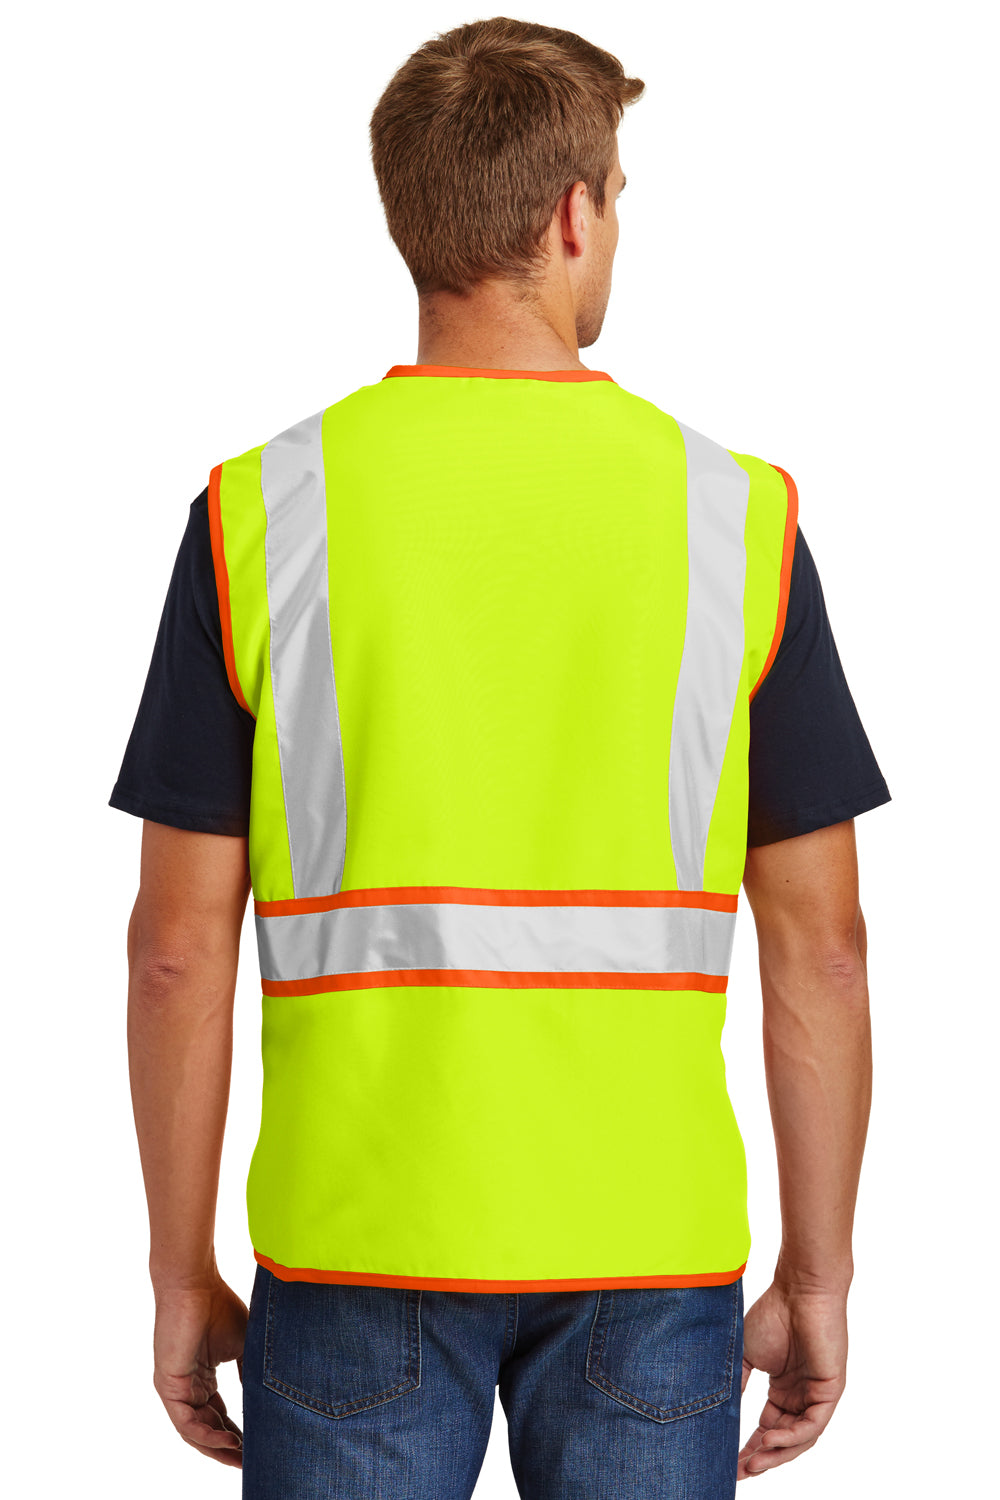 CornerStone CSV407 Mens ANSI 107 Class 2 Safety Full Zip Vest Safety Yellow Back